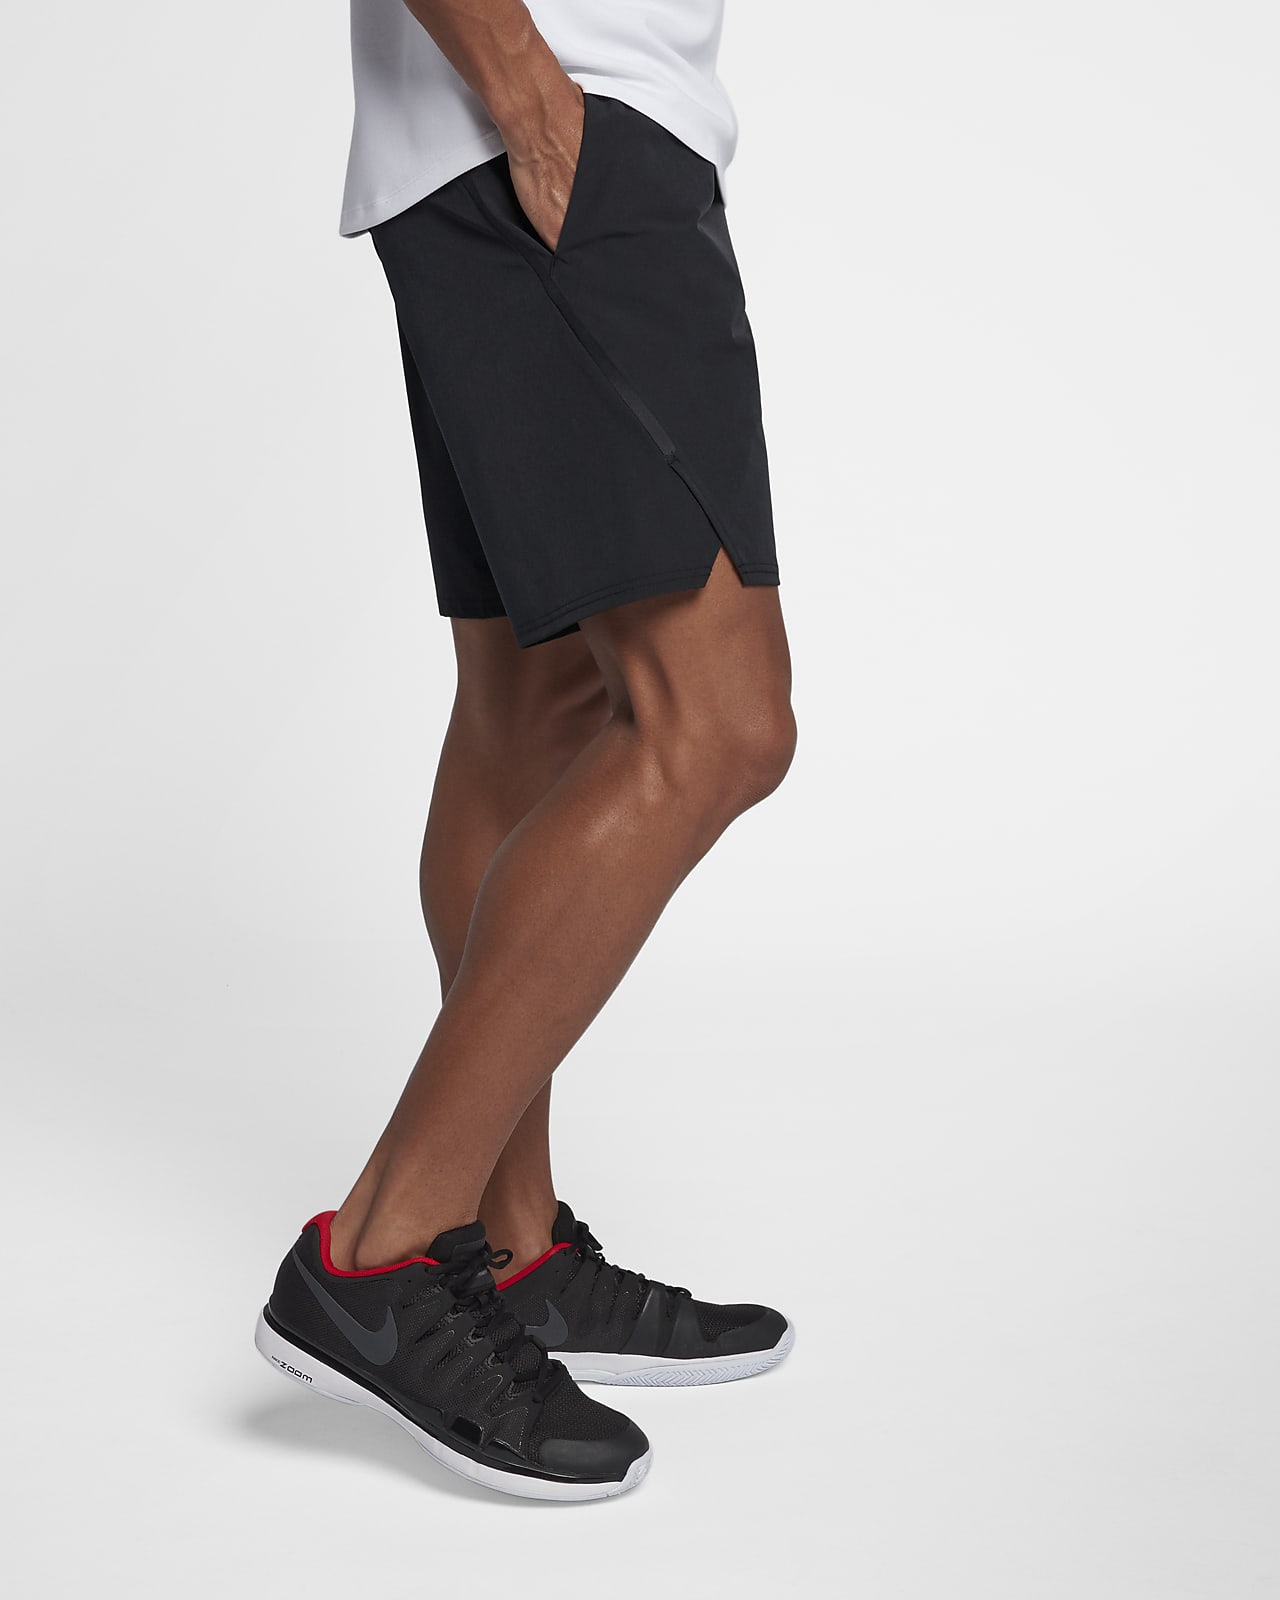 nike women's court flex tennis shorts